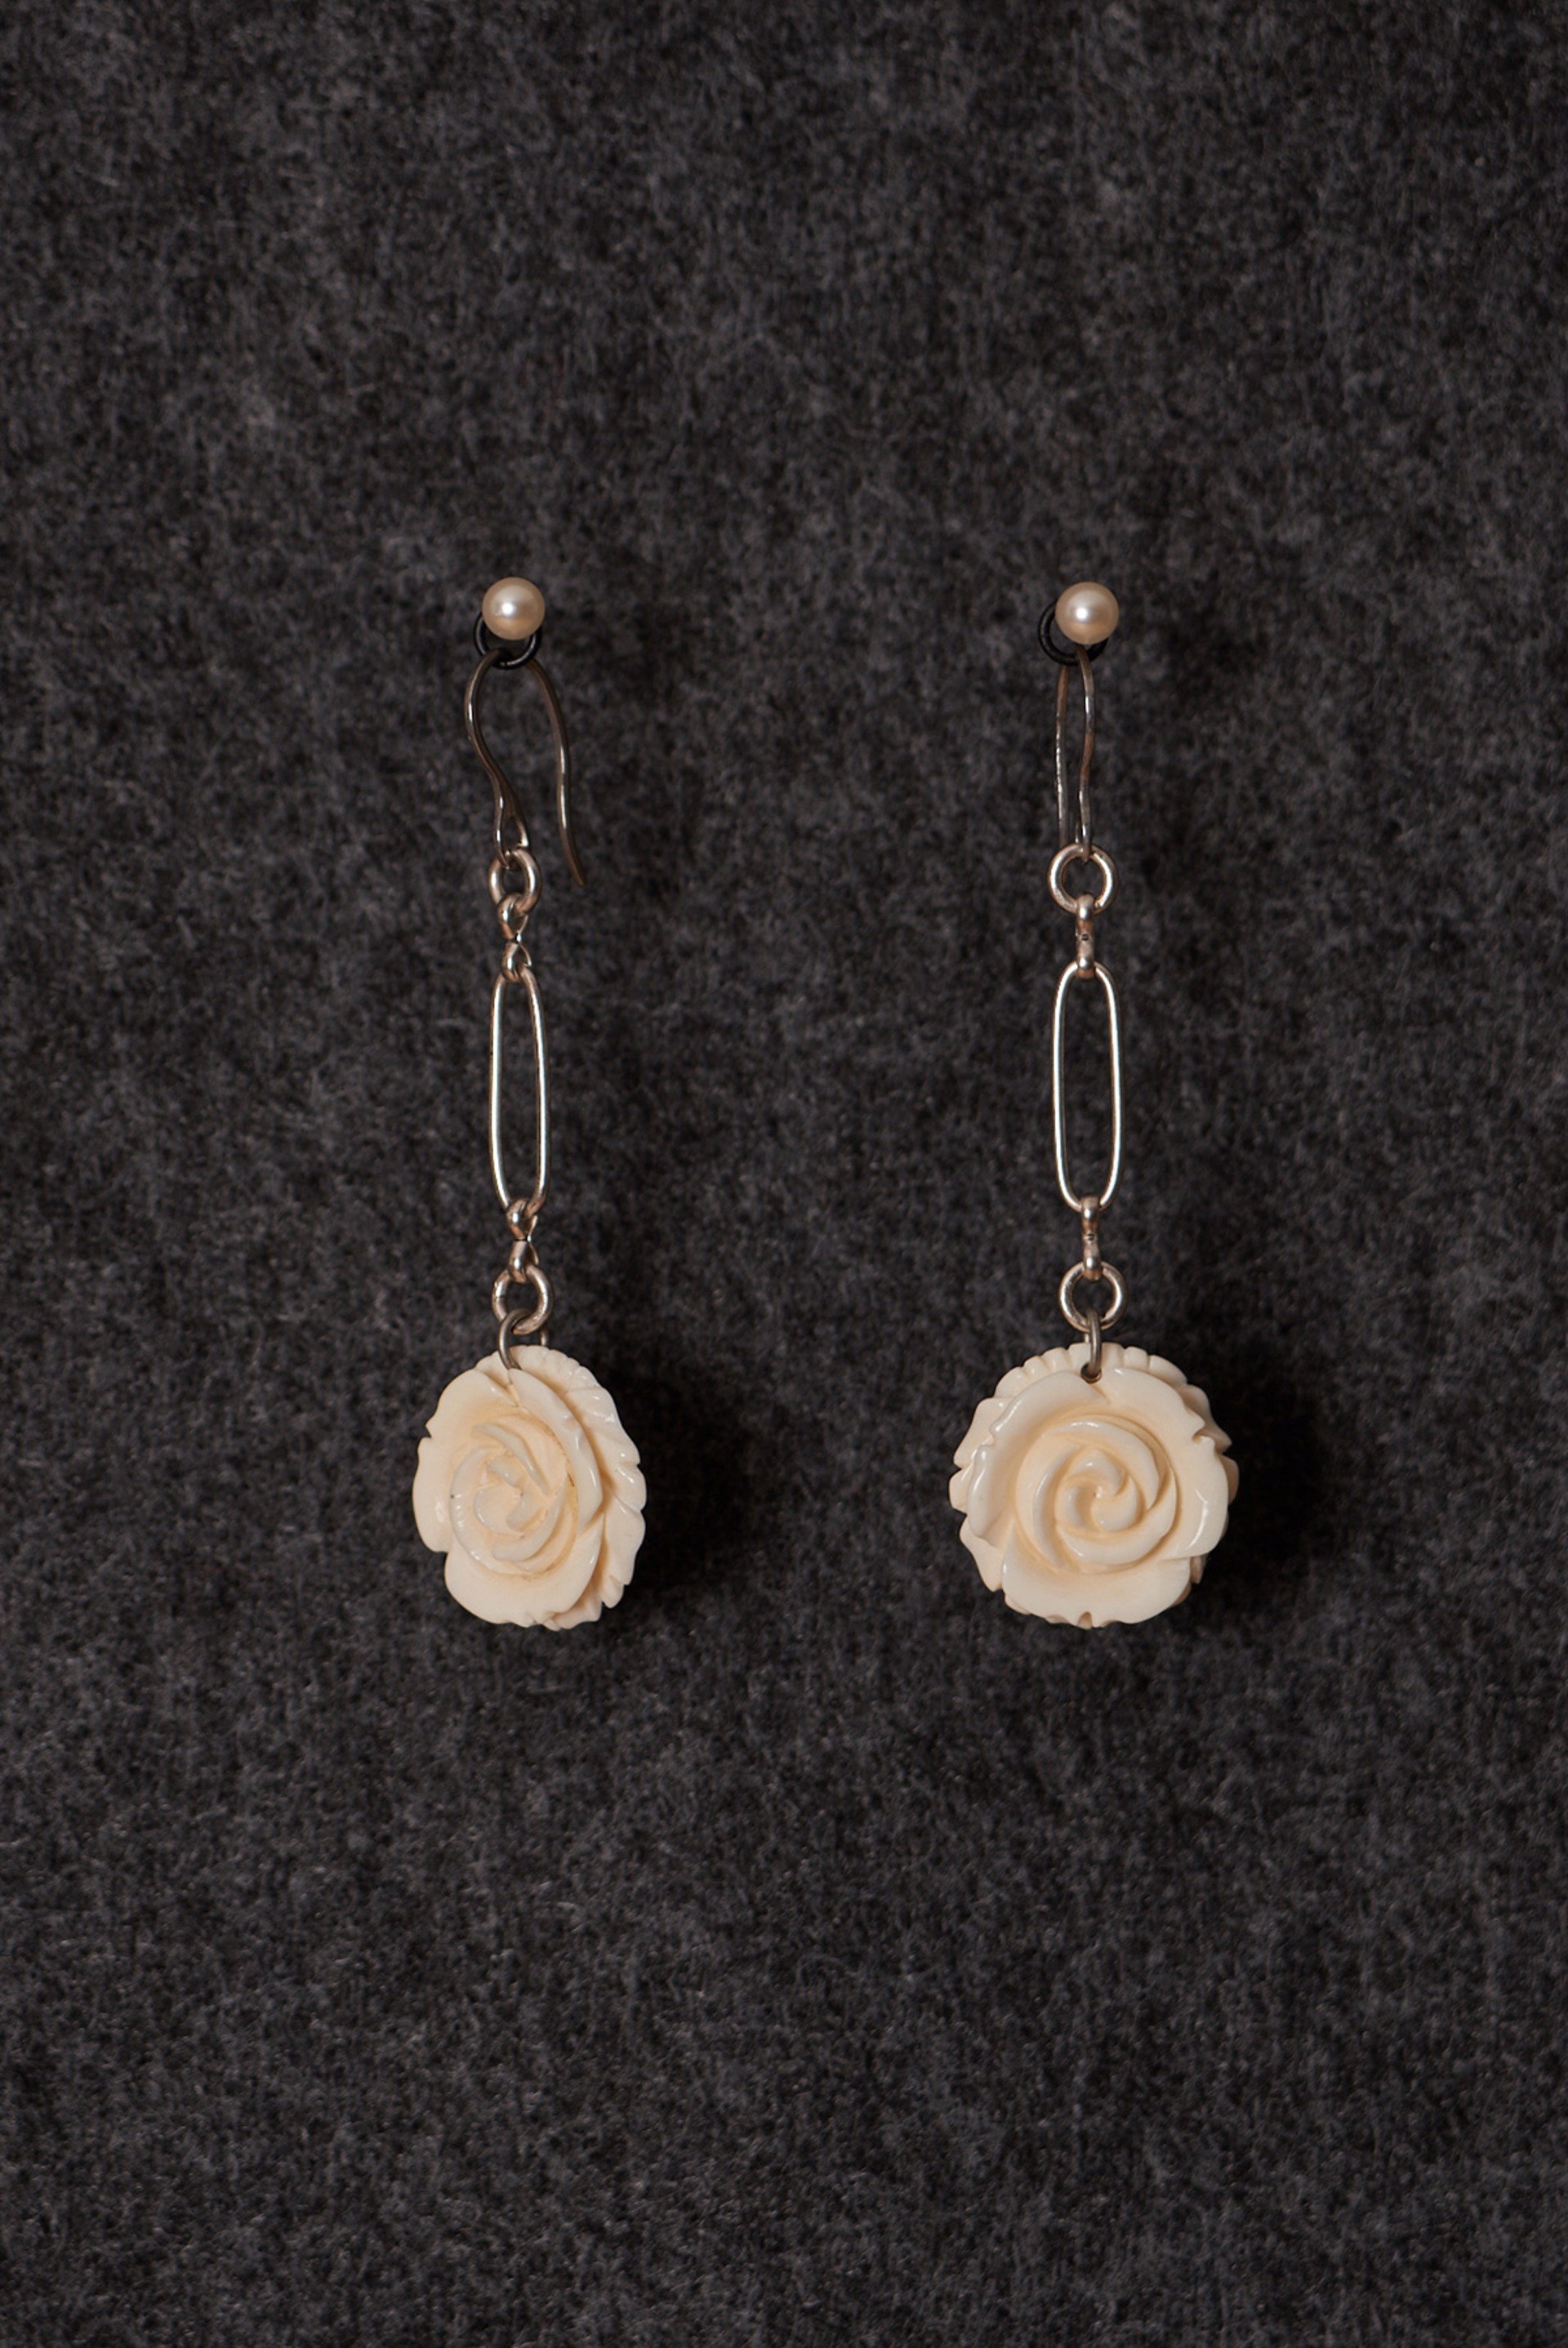 Silver Rosedrop Earrings by Cameron Johnson